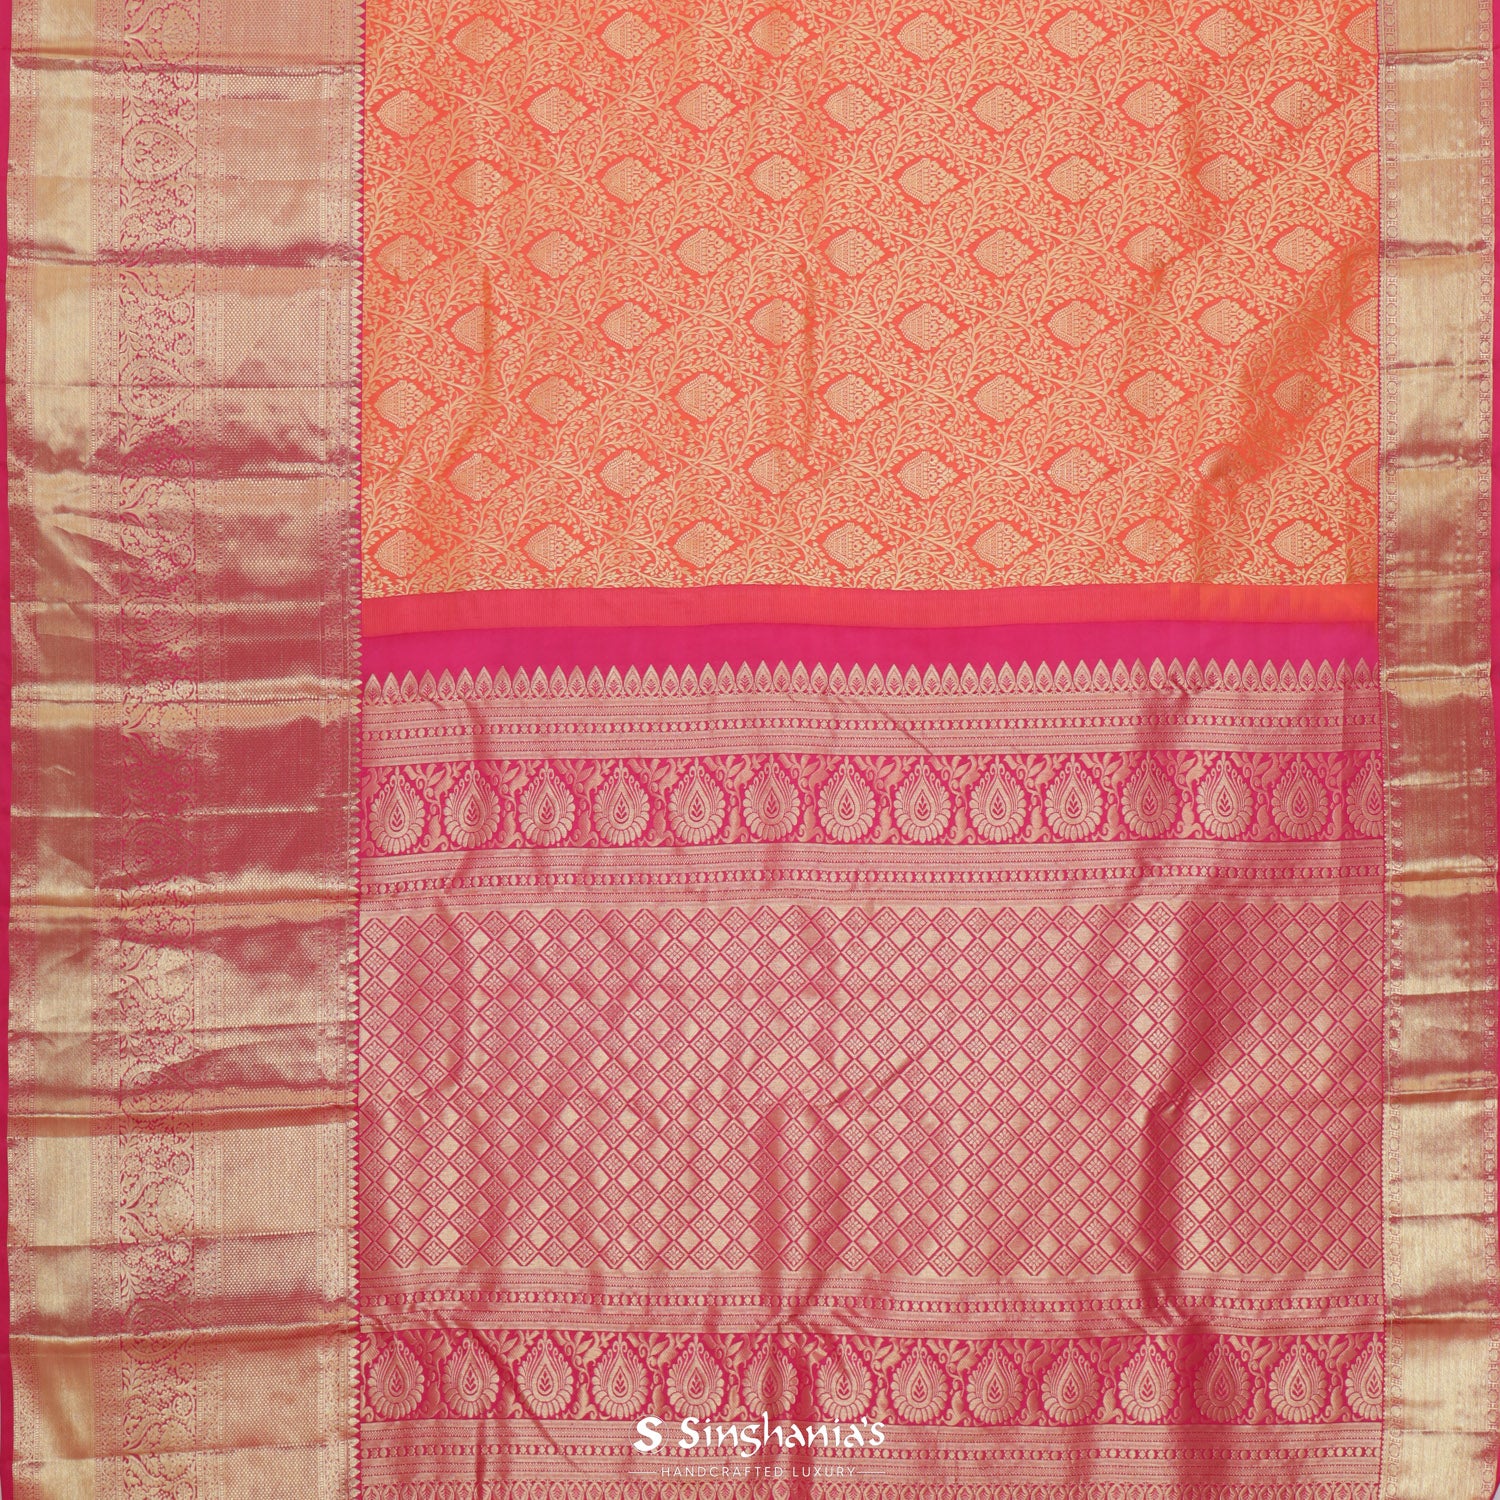 Outrageous Orange Kanjivaram Silk Saree With Floral Jaal Pattern